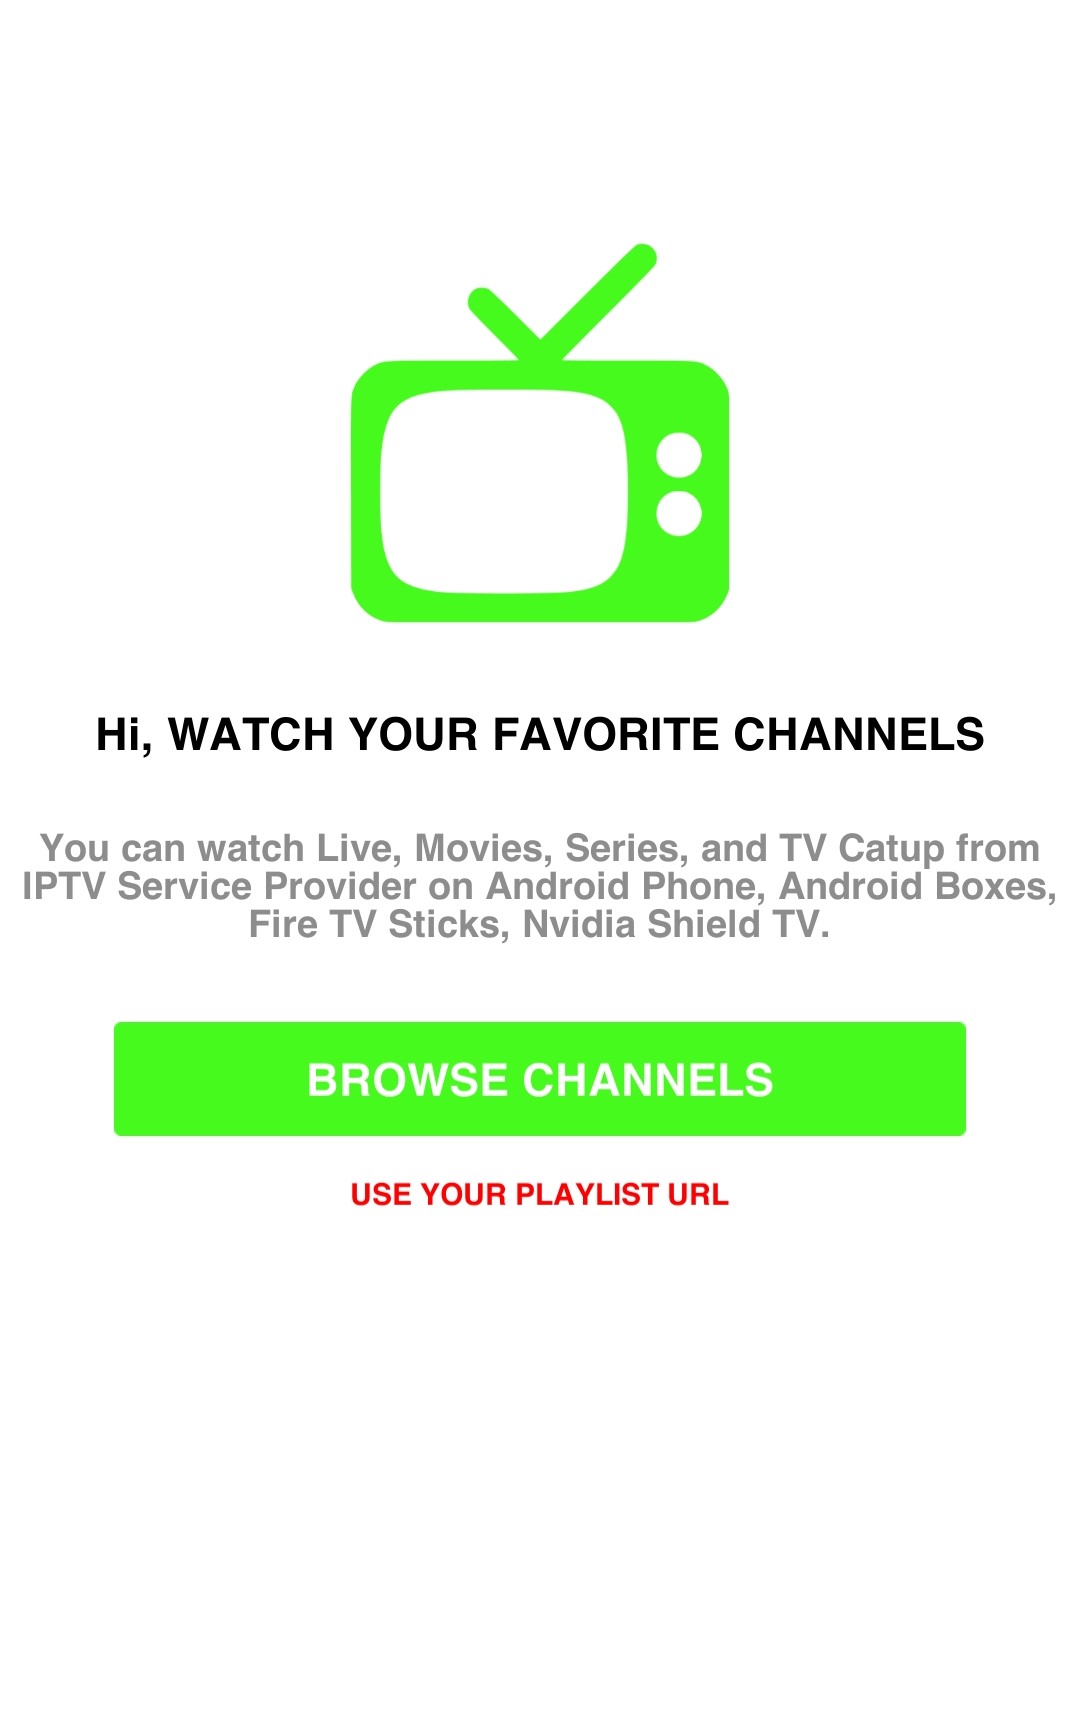 Select Use Your Playlist URL to stream Wish IPTV 